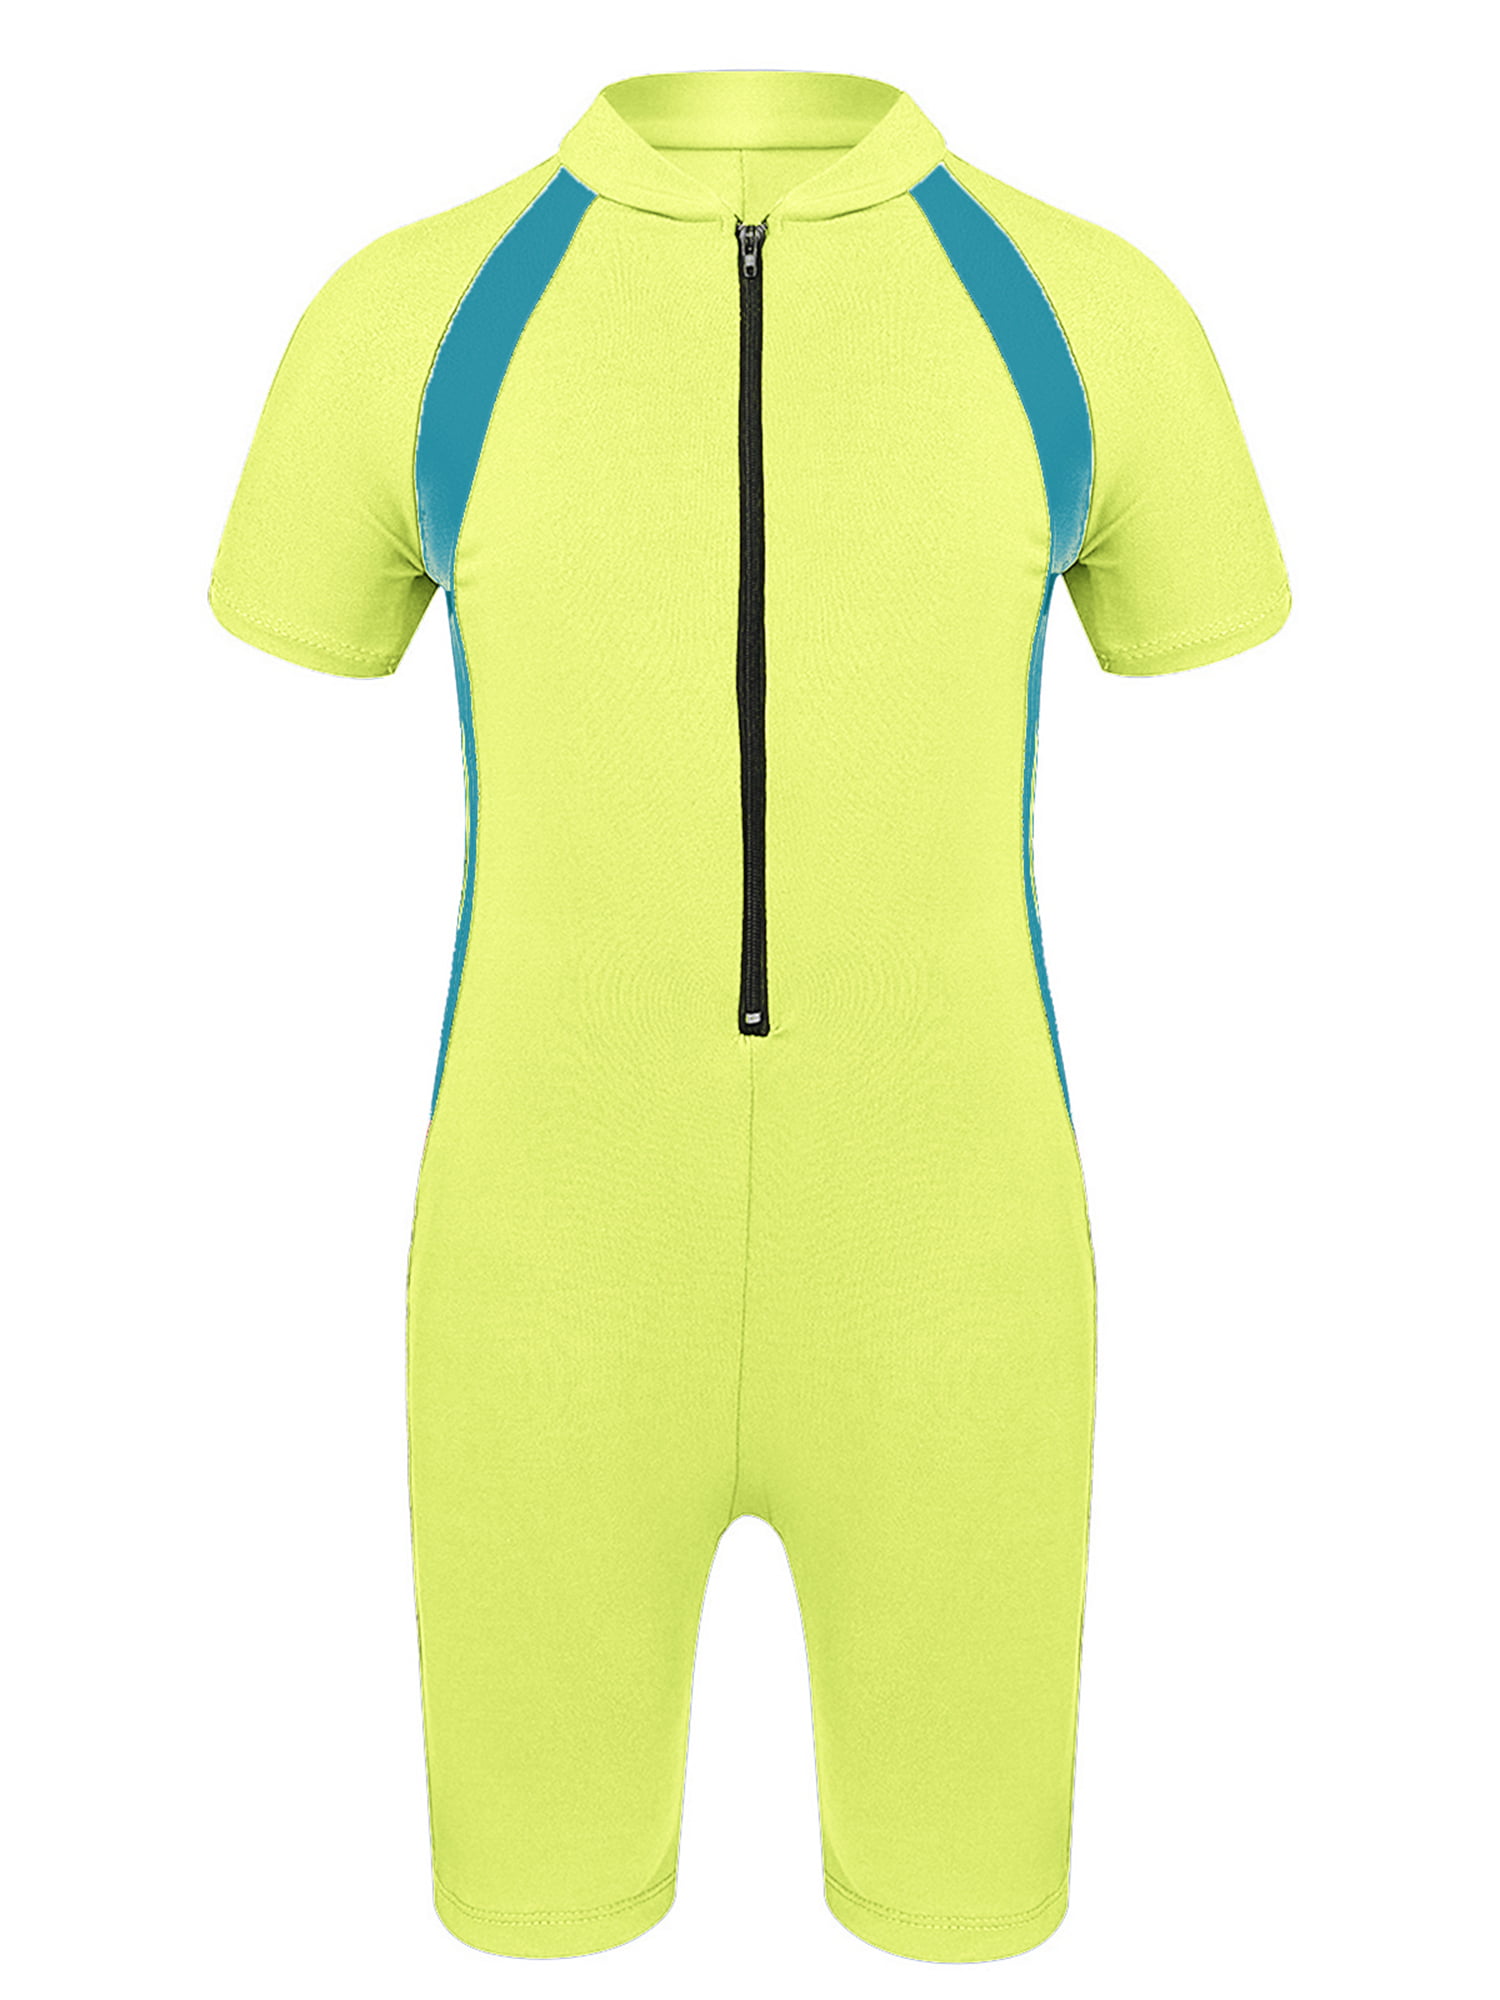 CHICTRY Baby Boy Girl UPF 50 One-Piece Stripes Sun Protective Swimsuit Rash Guard Swim Set 